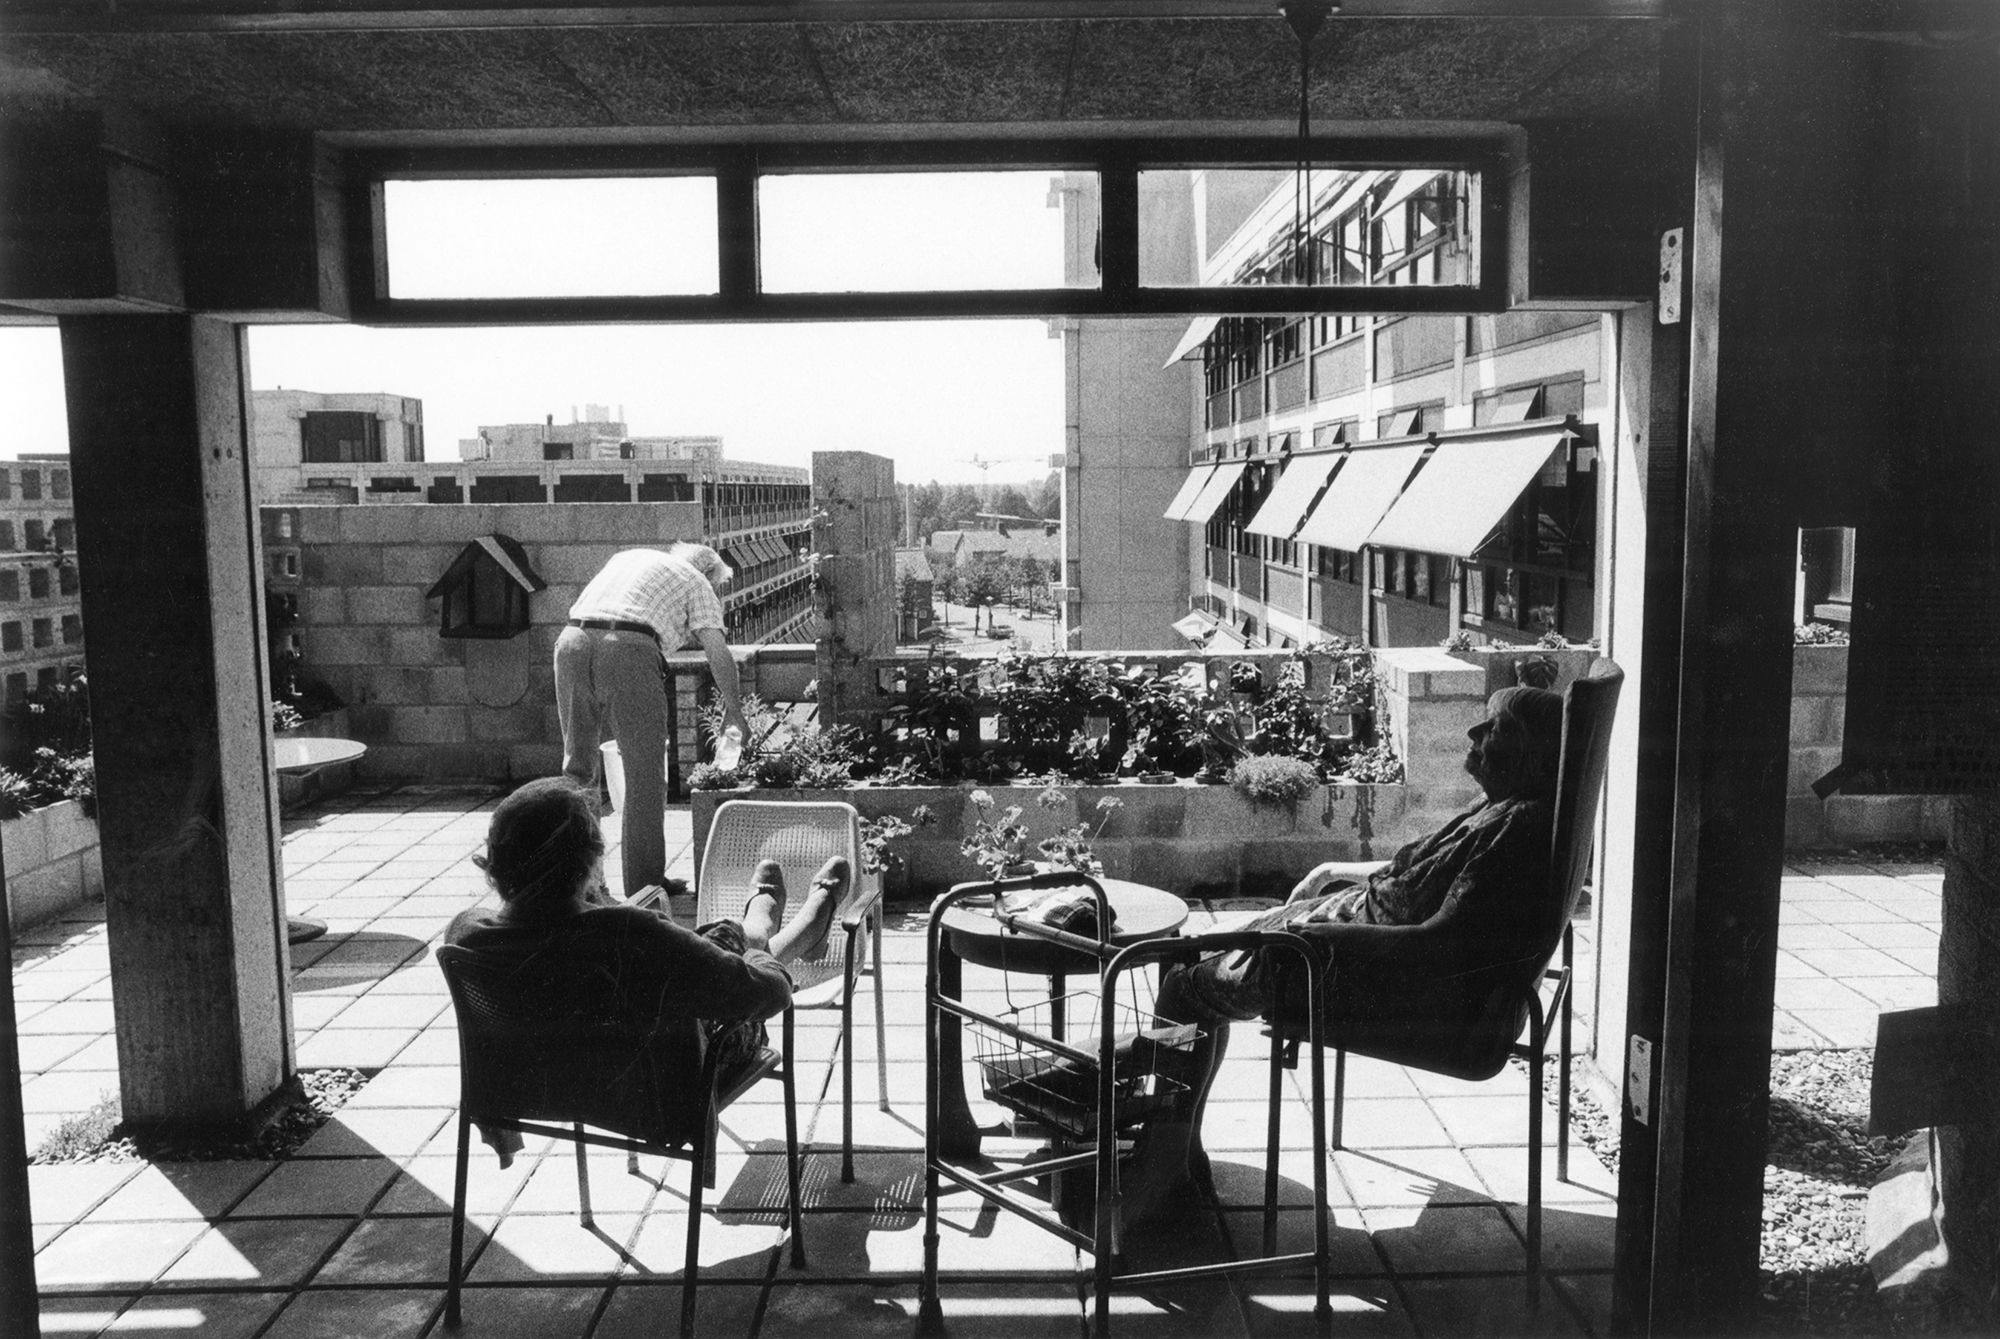 Herman Hertzberger. ‘De Drie Hoven' Retirement Home, Amsterdam, 1964-74. Photo: Willem Diepraam 